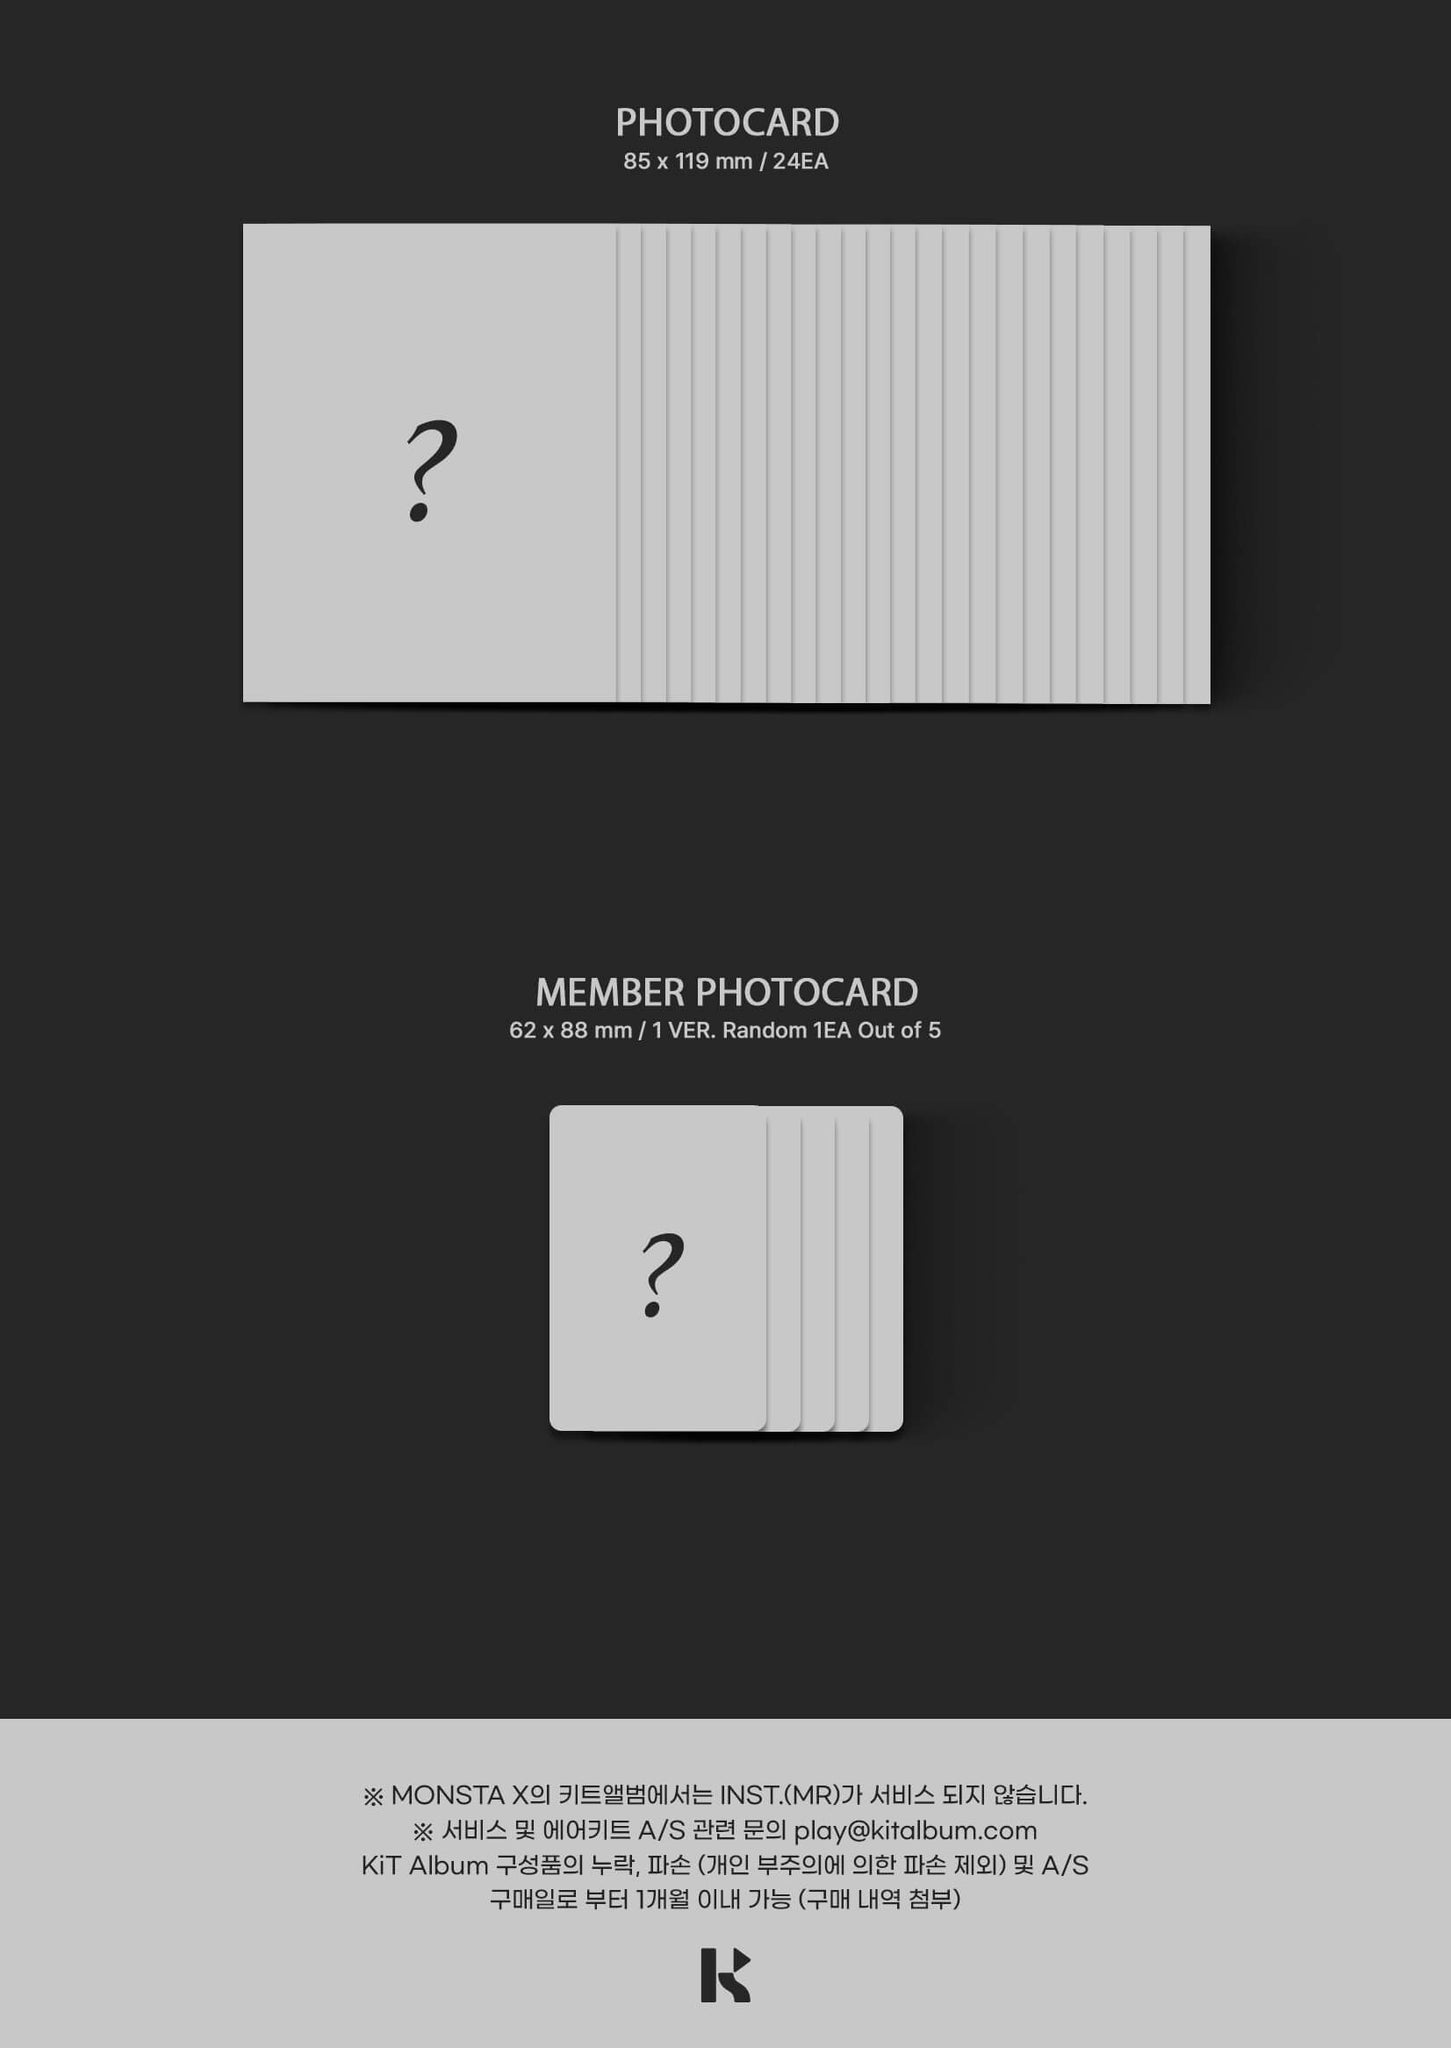 MONSTA X 12th Mini Album REASON - KiT Version Photo Cards Member Photocard